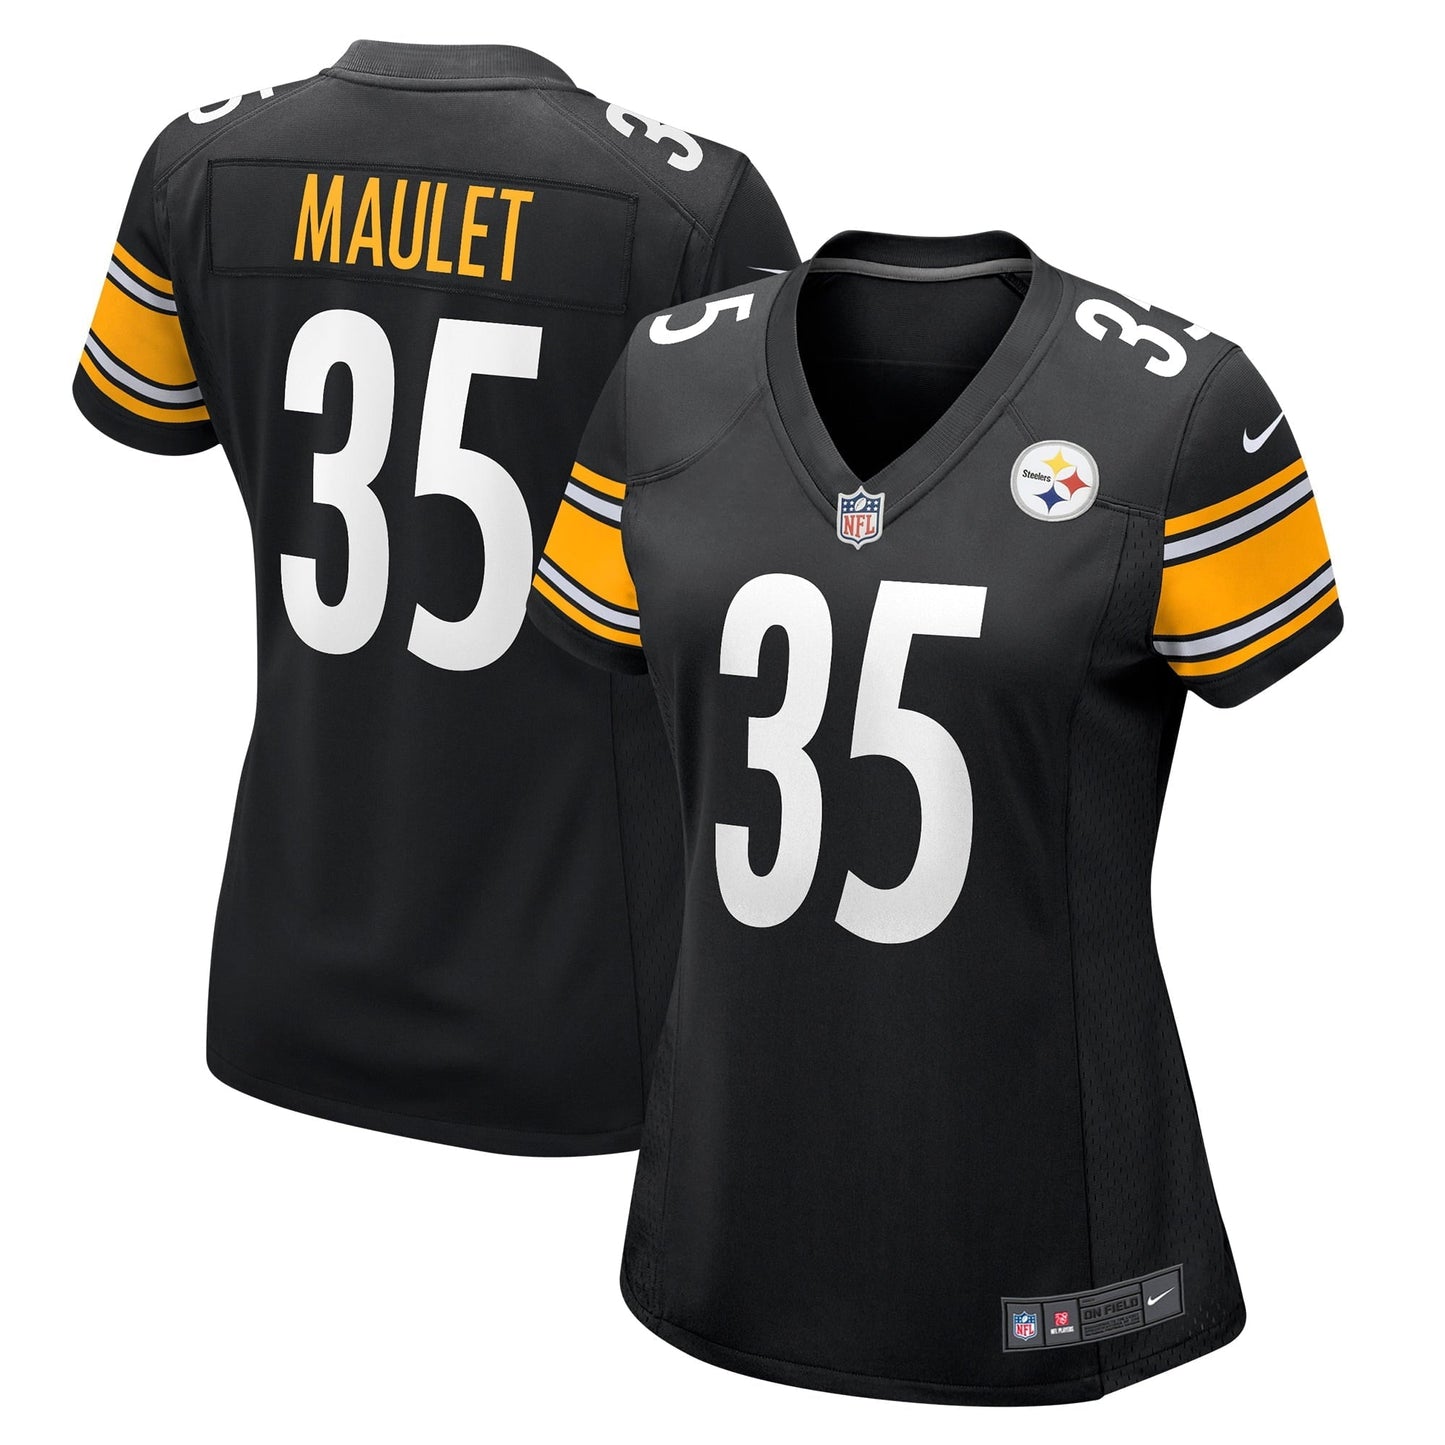 Women's Nike Arthur Maulet Black Pittsburgh Steelers Game Jersey